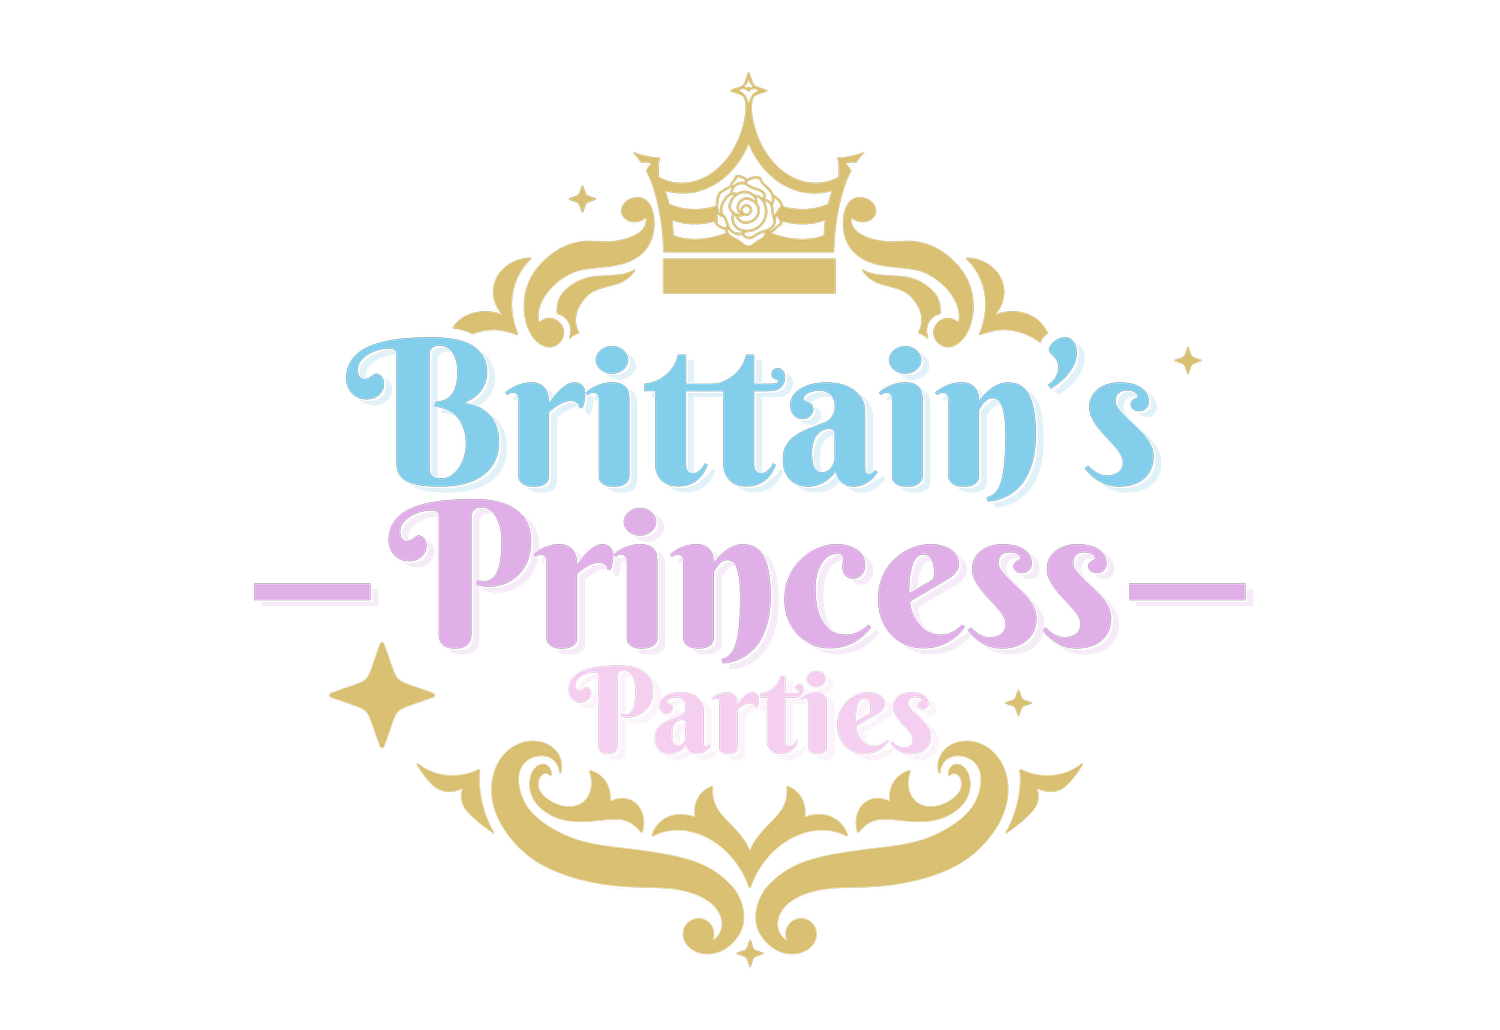 Brittain's Princess Parties